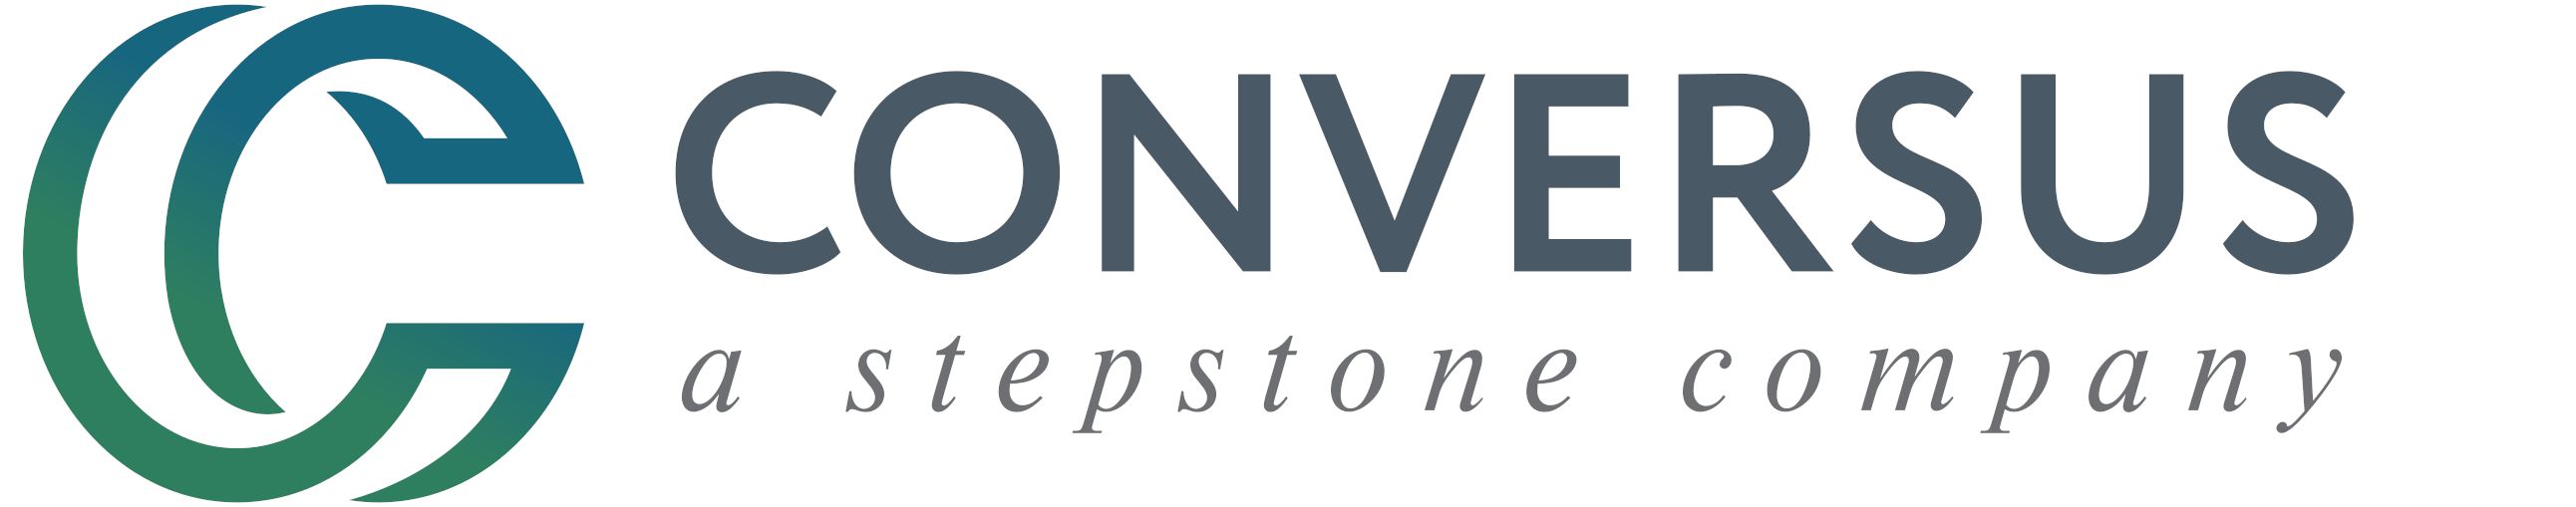 Conversus_StepStone_LLC_Logo (1).jpg